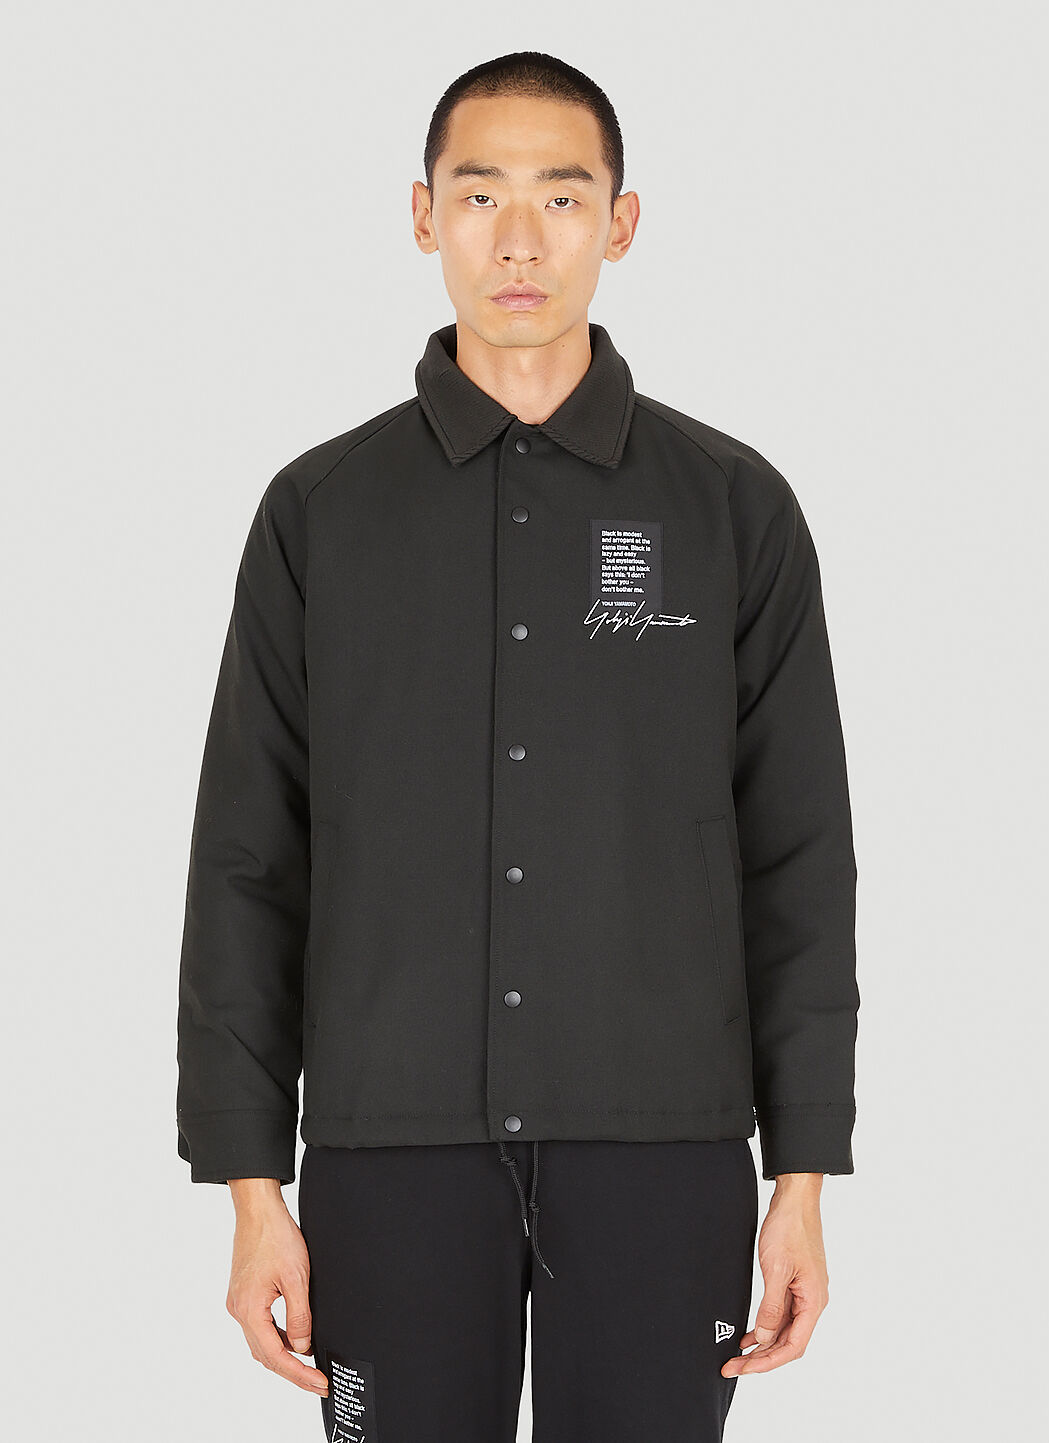 Yohji Yamamoto x New Era Coach Jacket in Black | LN-CC®